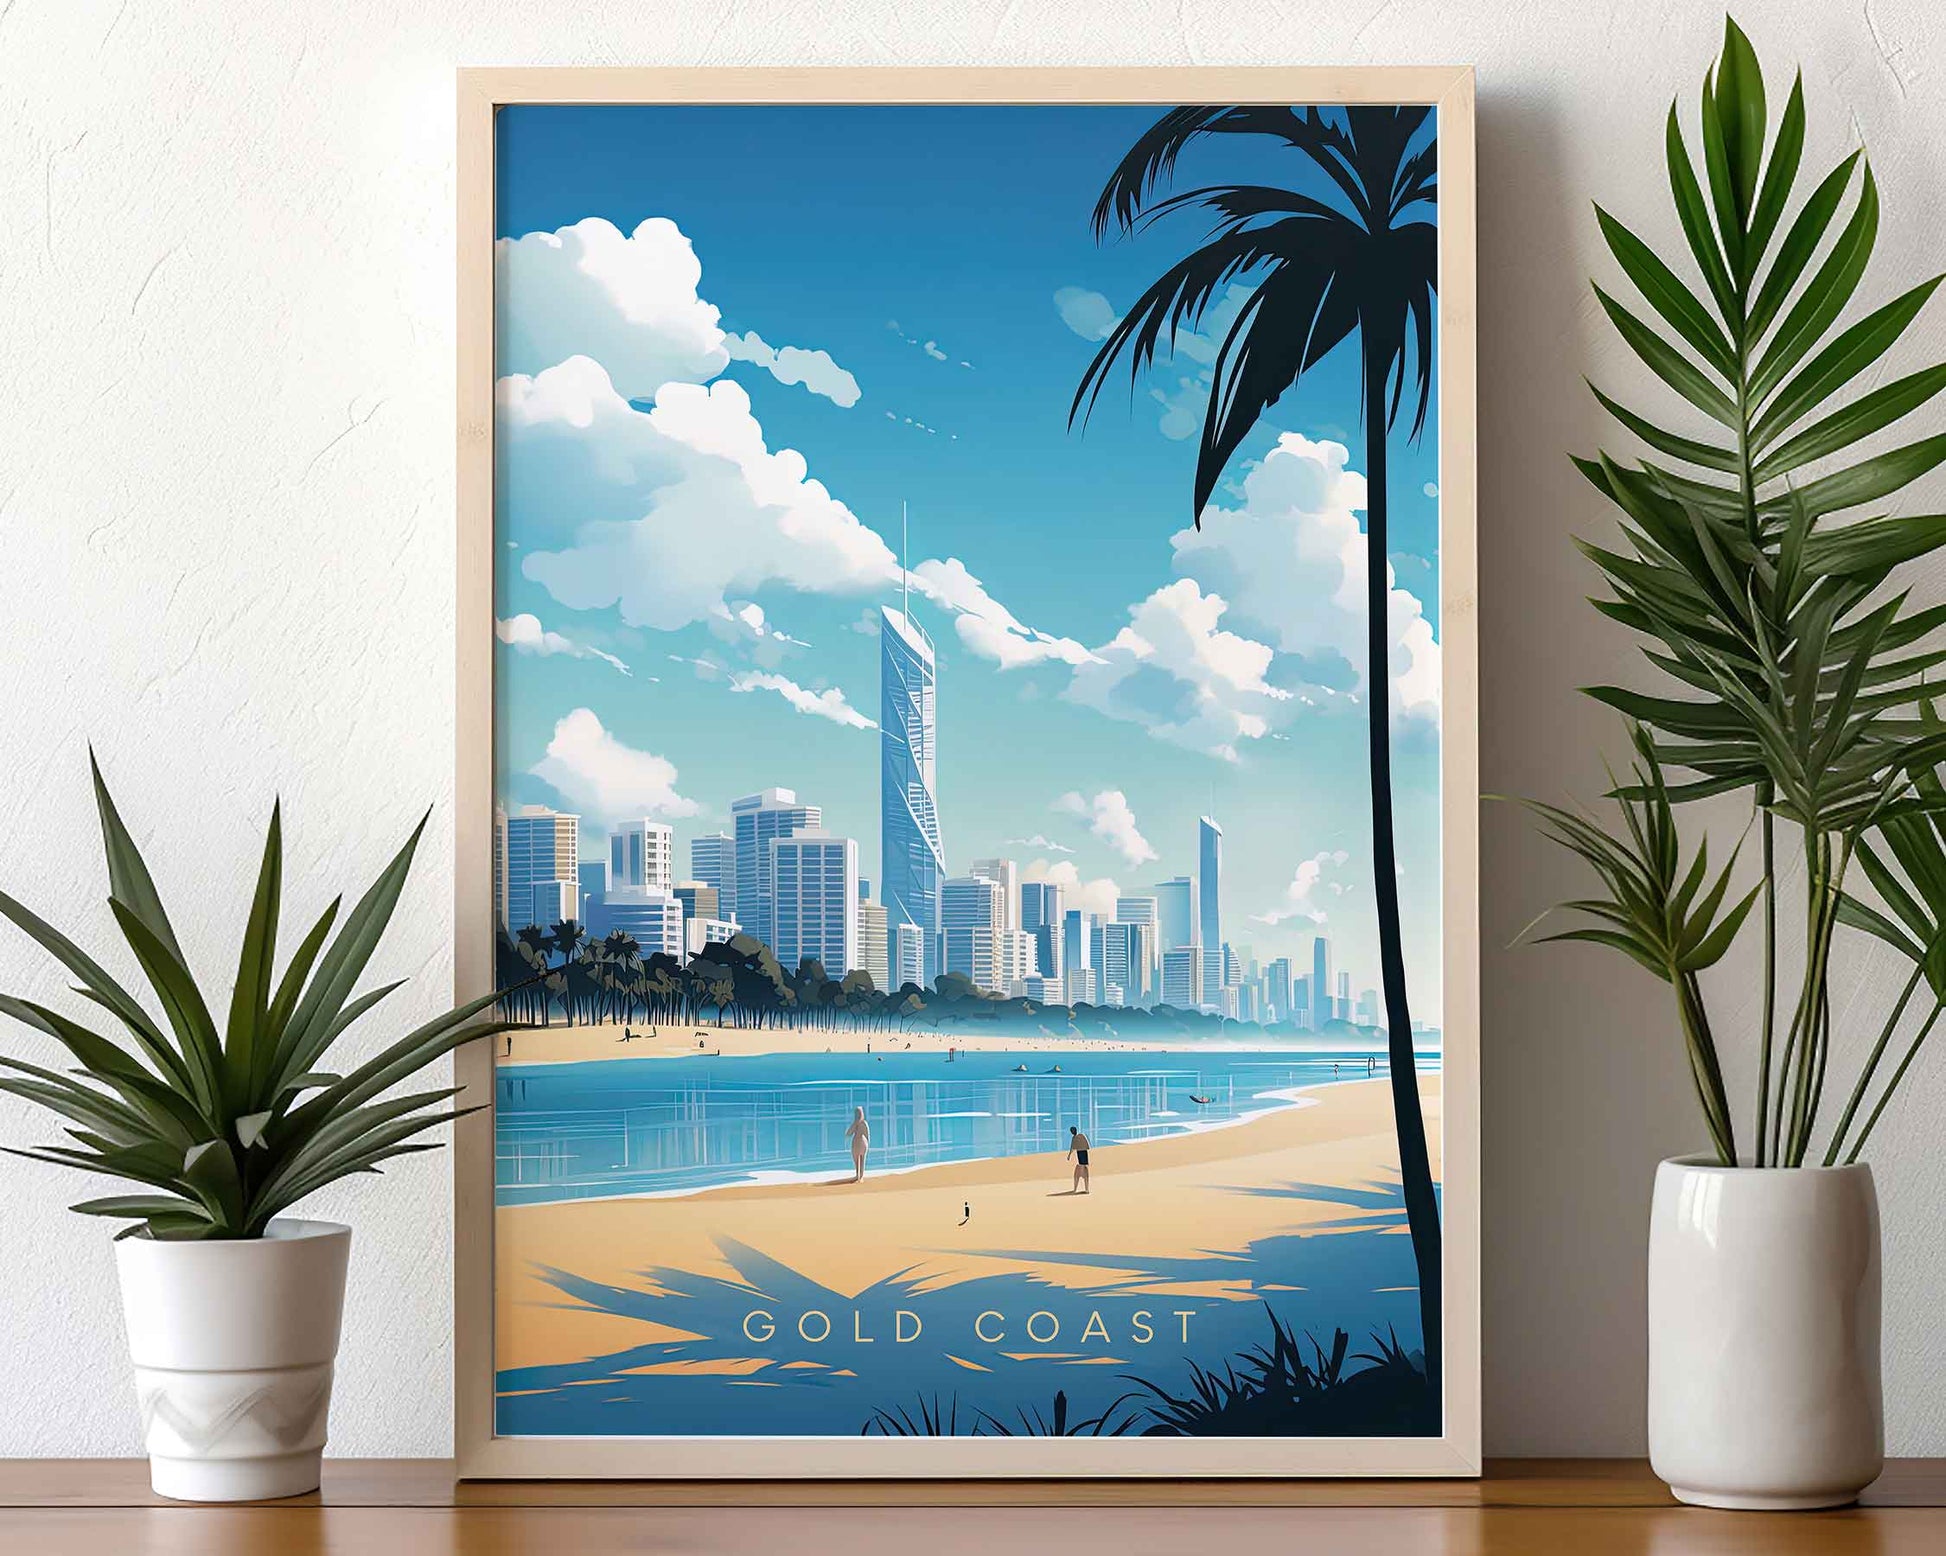 Framed Image of Gold Coast Australia Travel Wall Art Poster Prints Illustration